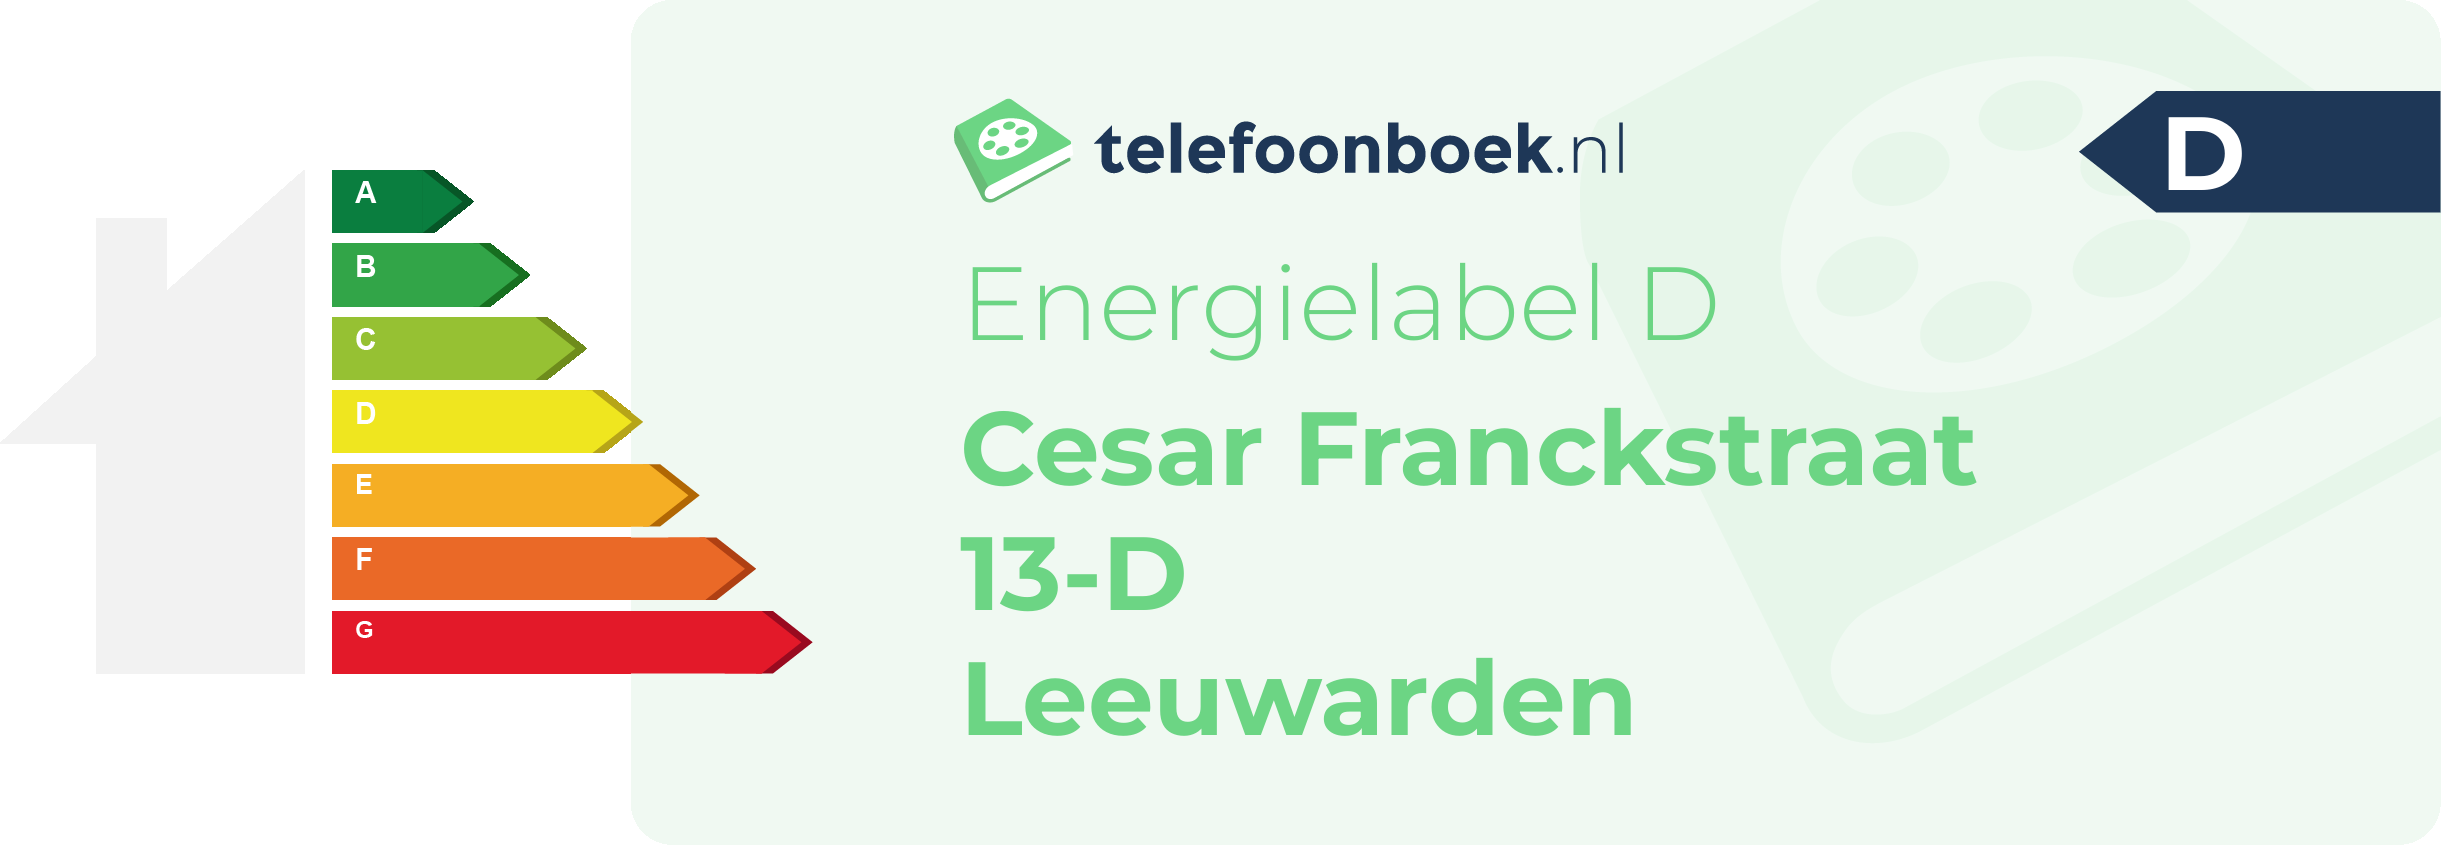 Energielabel Cesar Franckstraat 13-D Leeuwarden